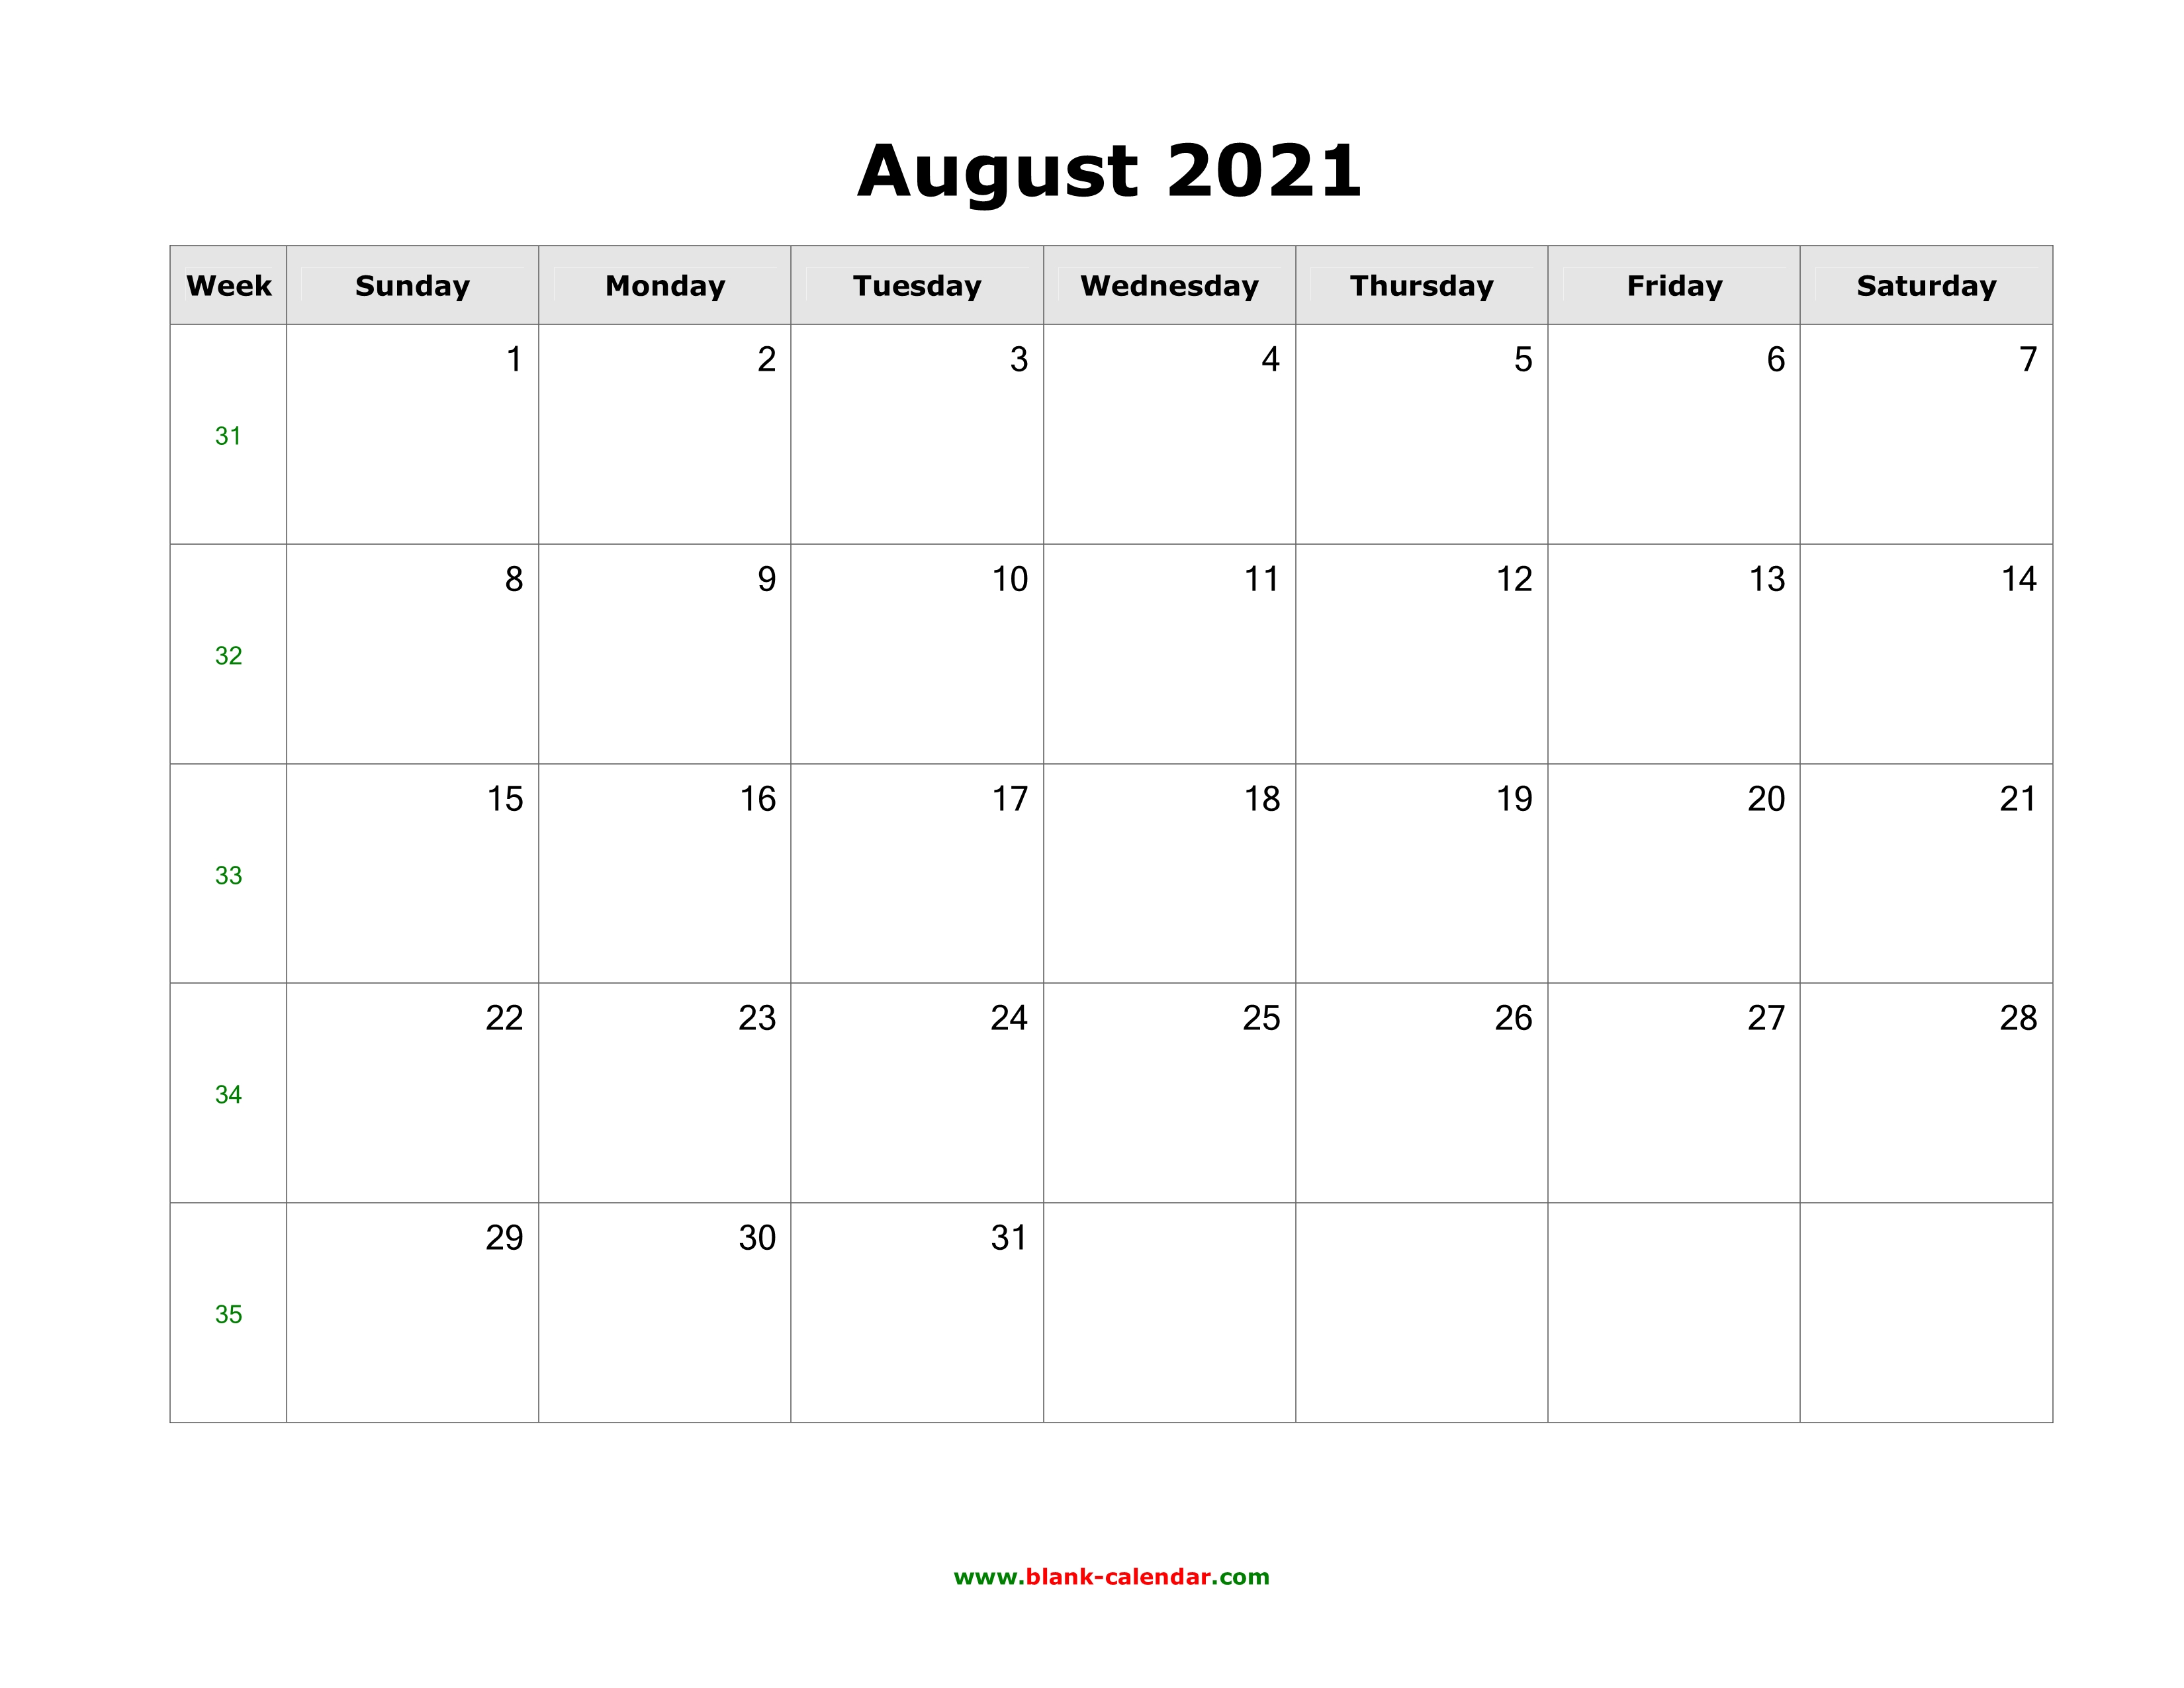 Download August 2021 Blank Calendar (horizontal)